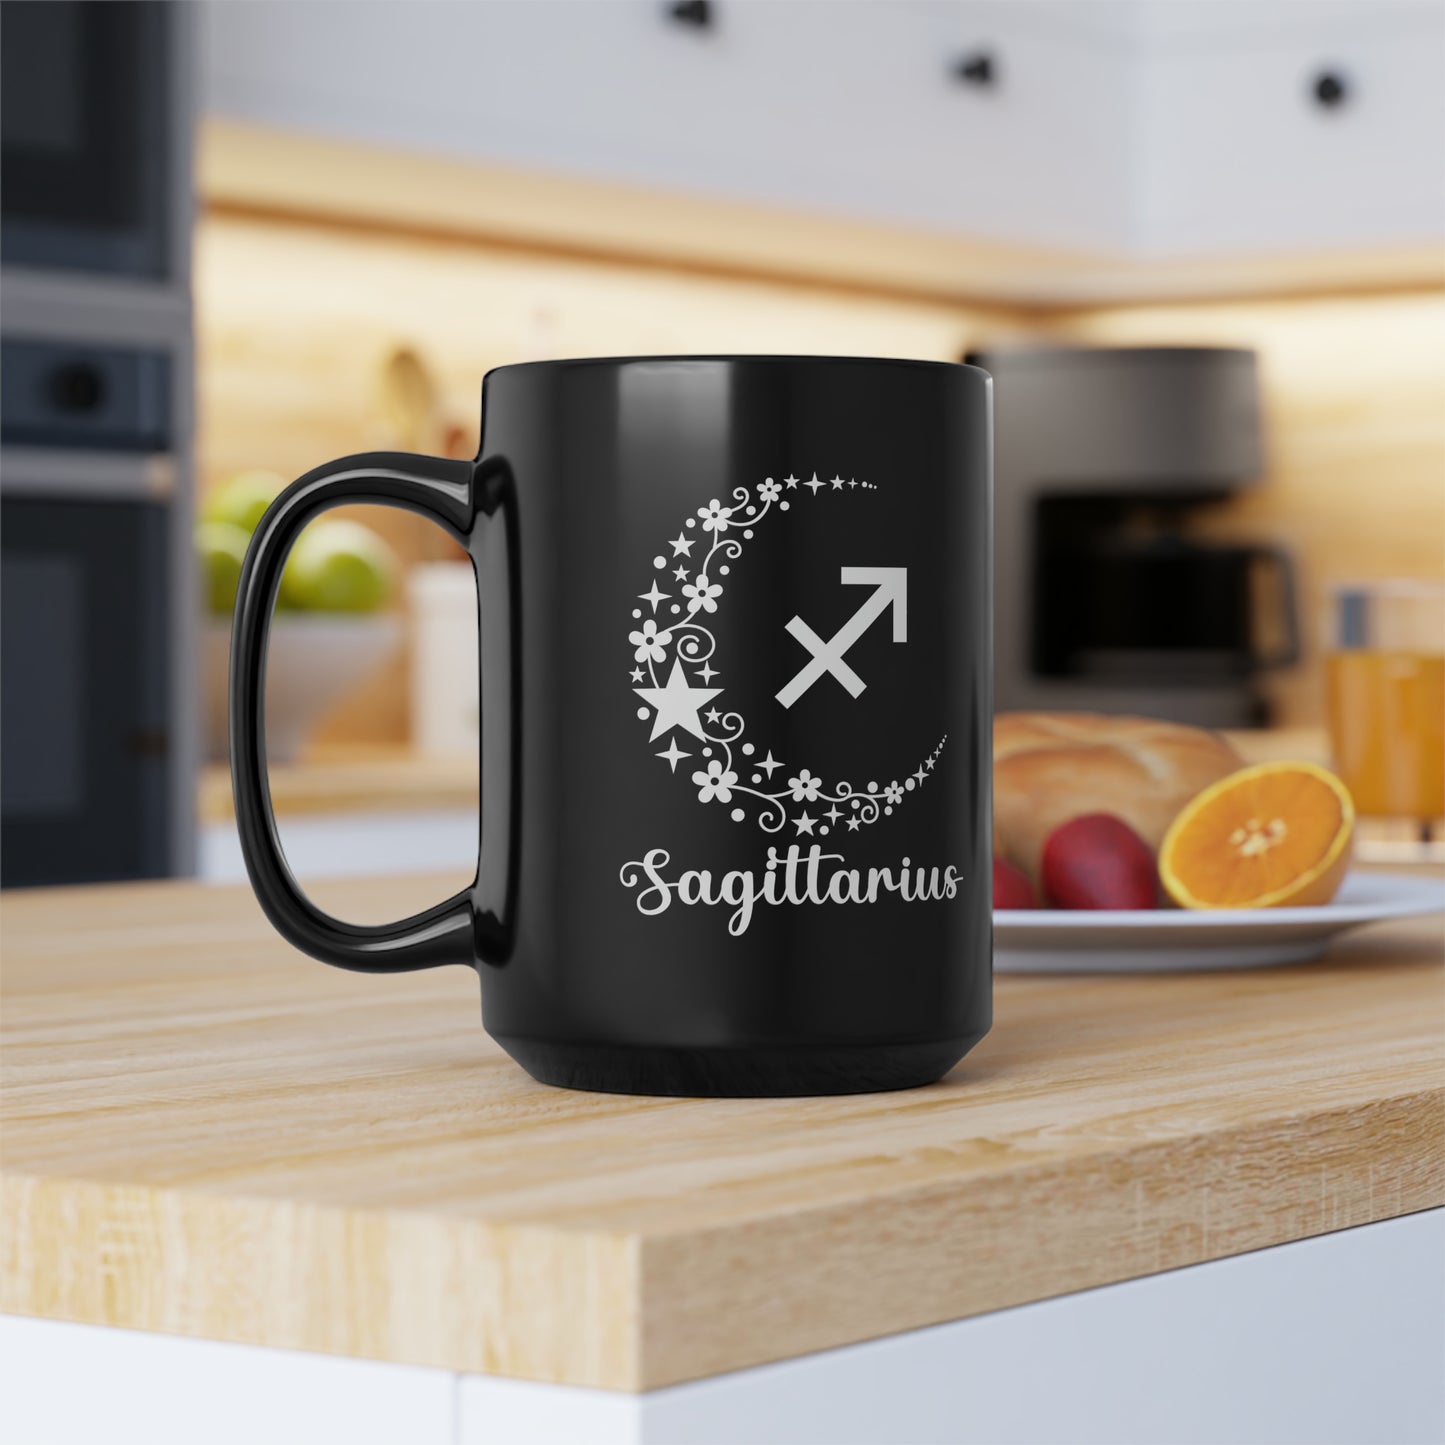 Sagittarius crescent moon mug